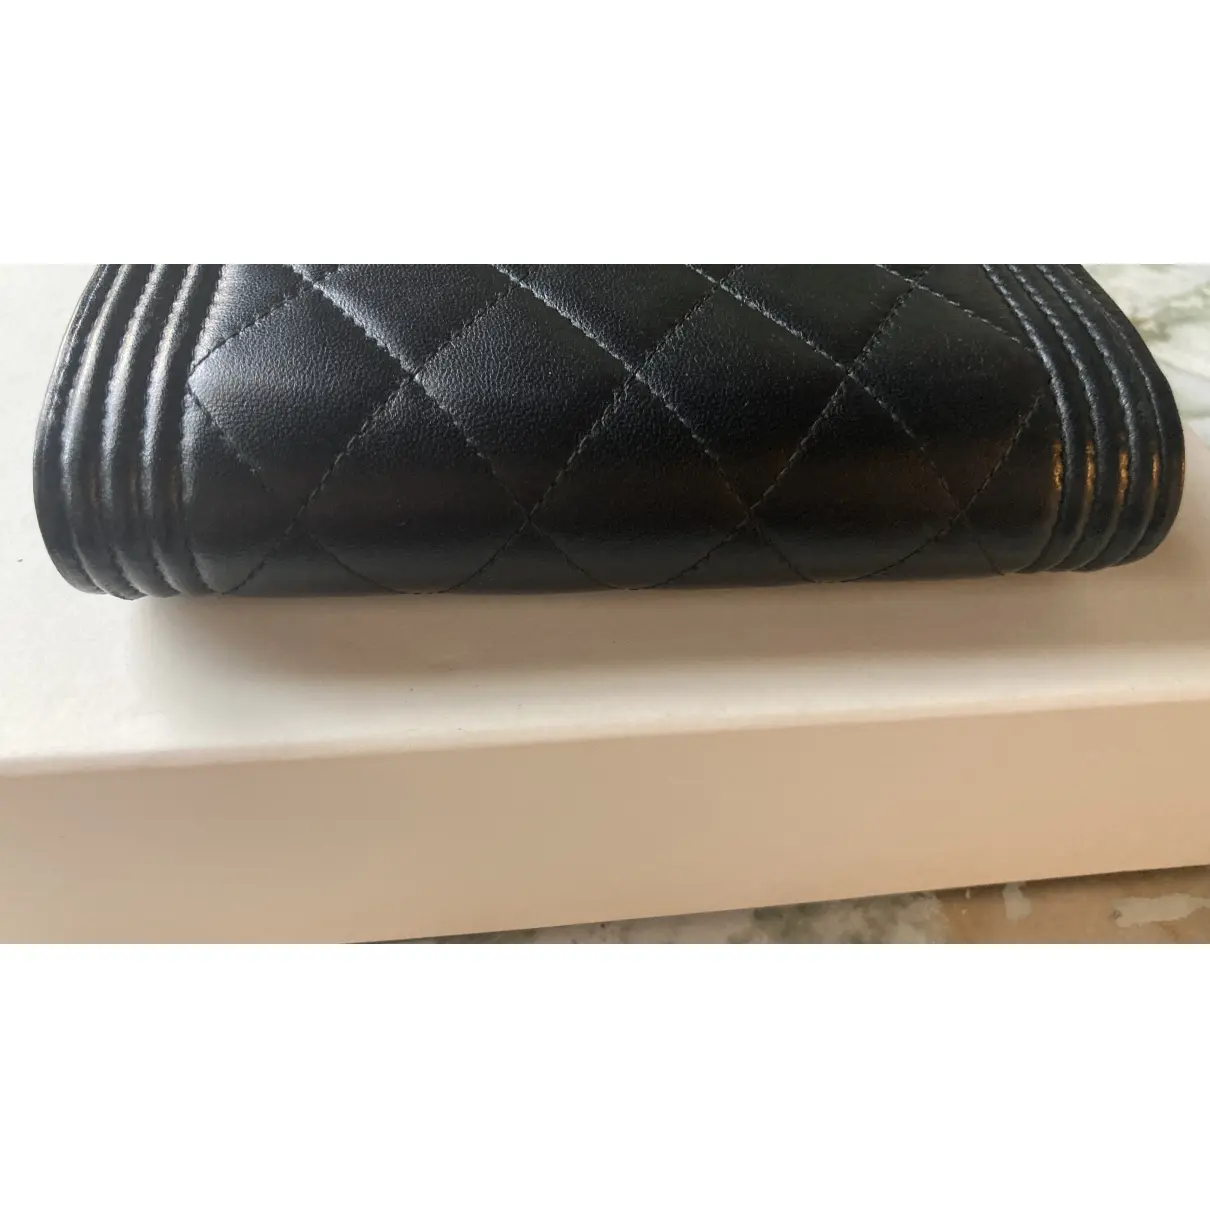 Buy Chanel Boy leather wallet online